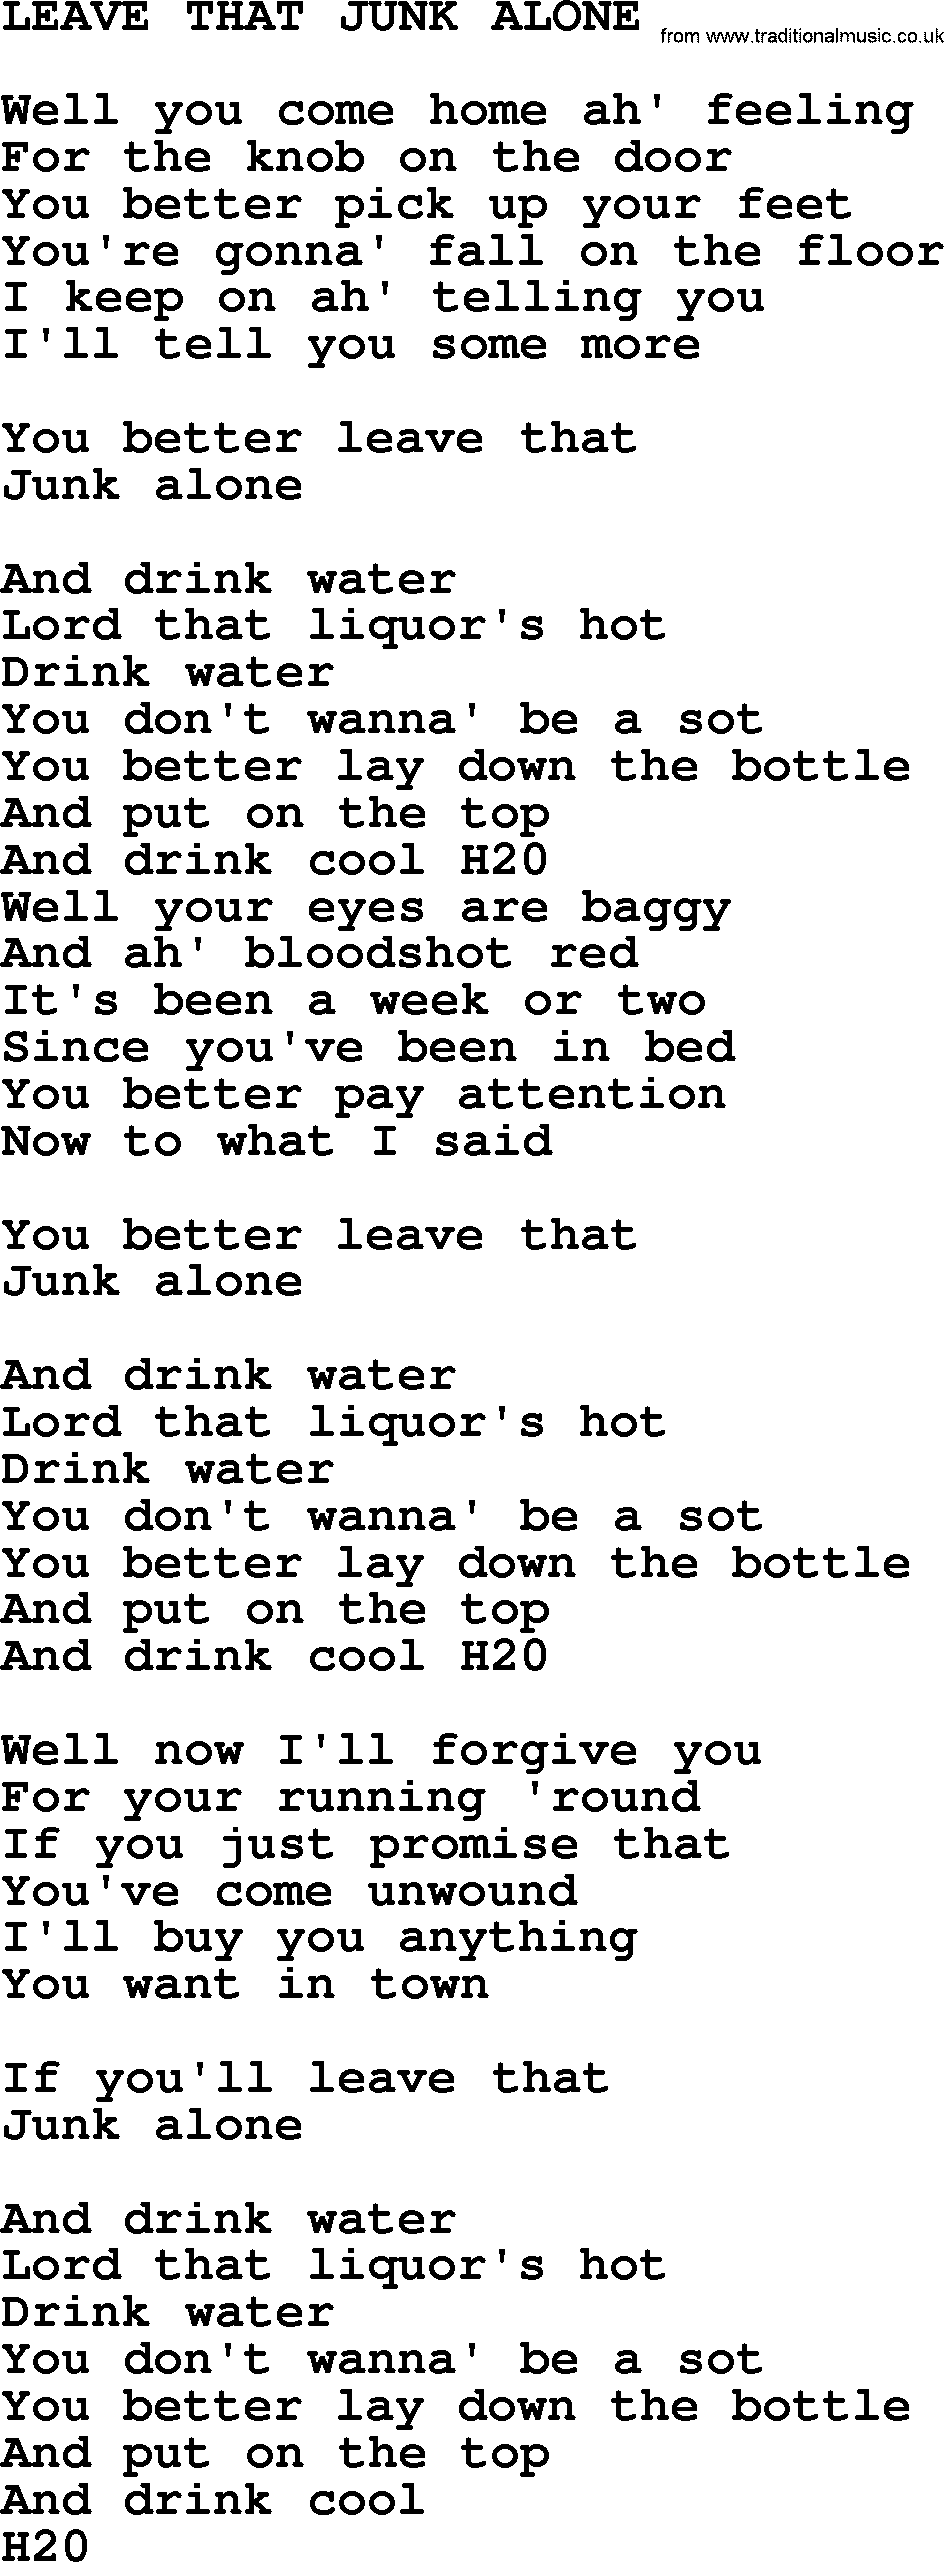 Johnny Cash song Leave That Junk Alone.txt lyrics